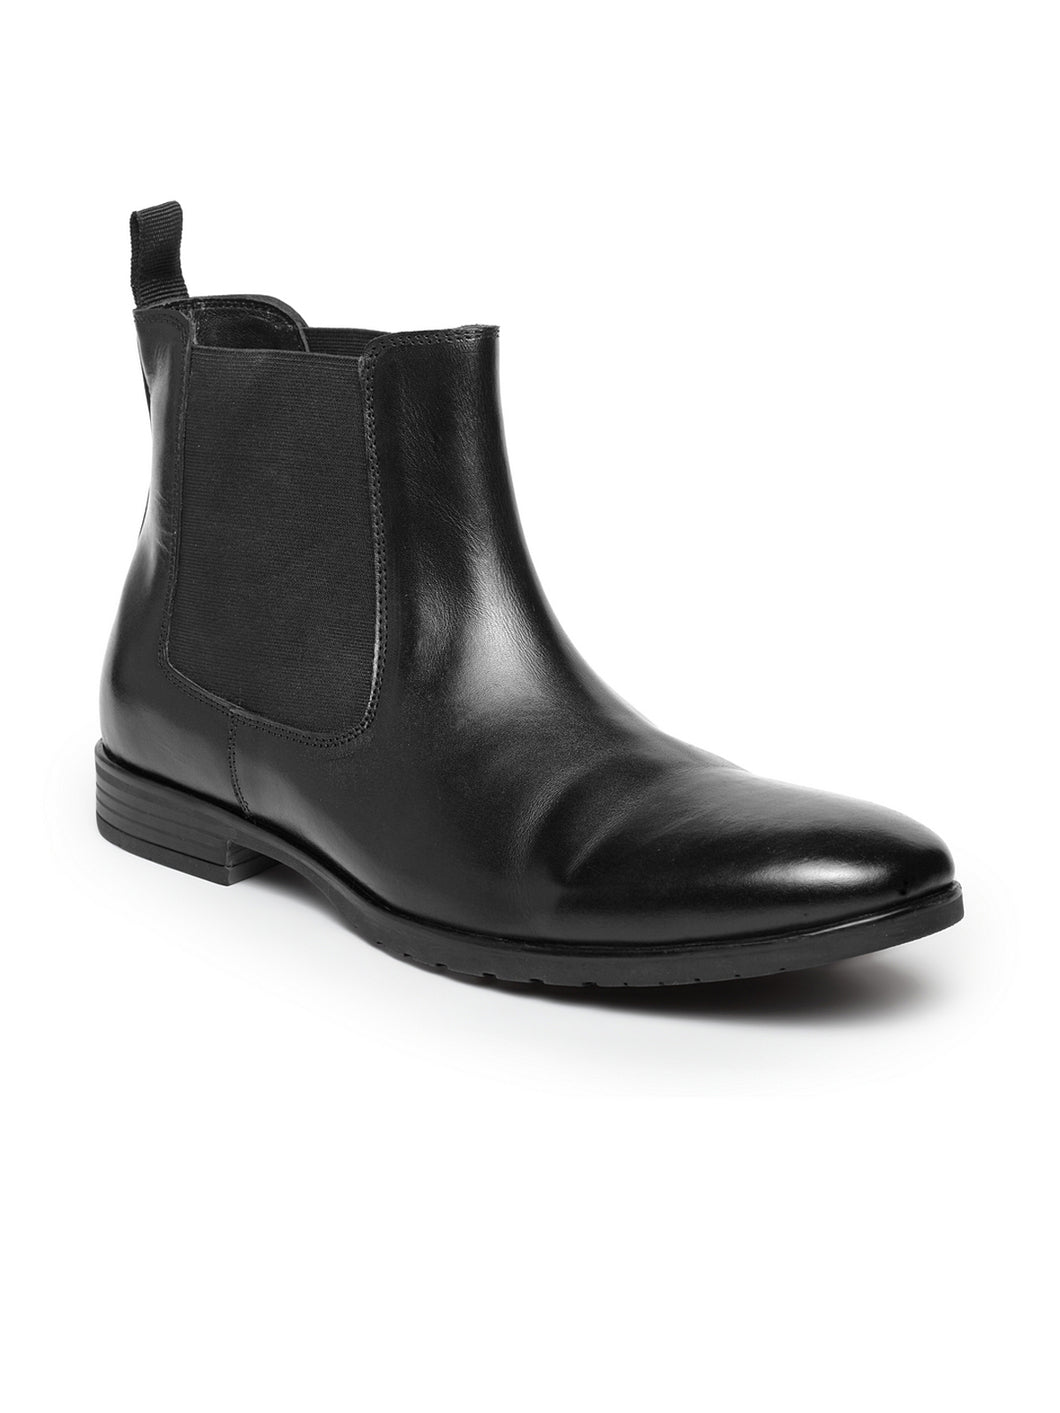 Teakwood Leathers Men's Black Chelsea Boots